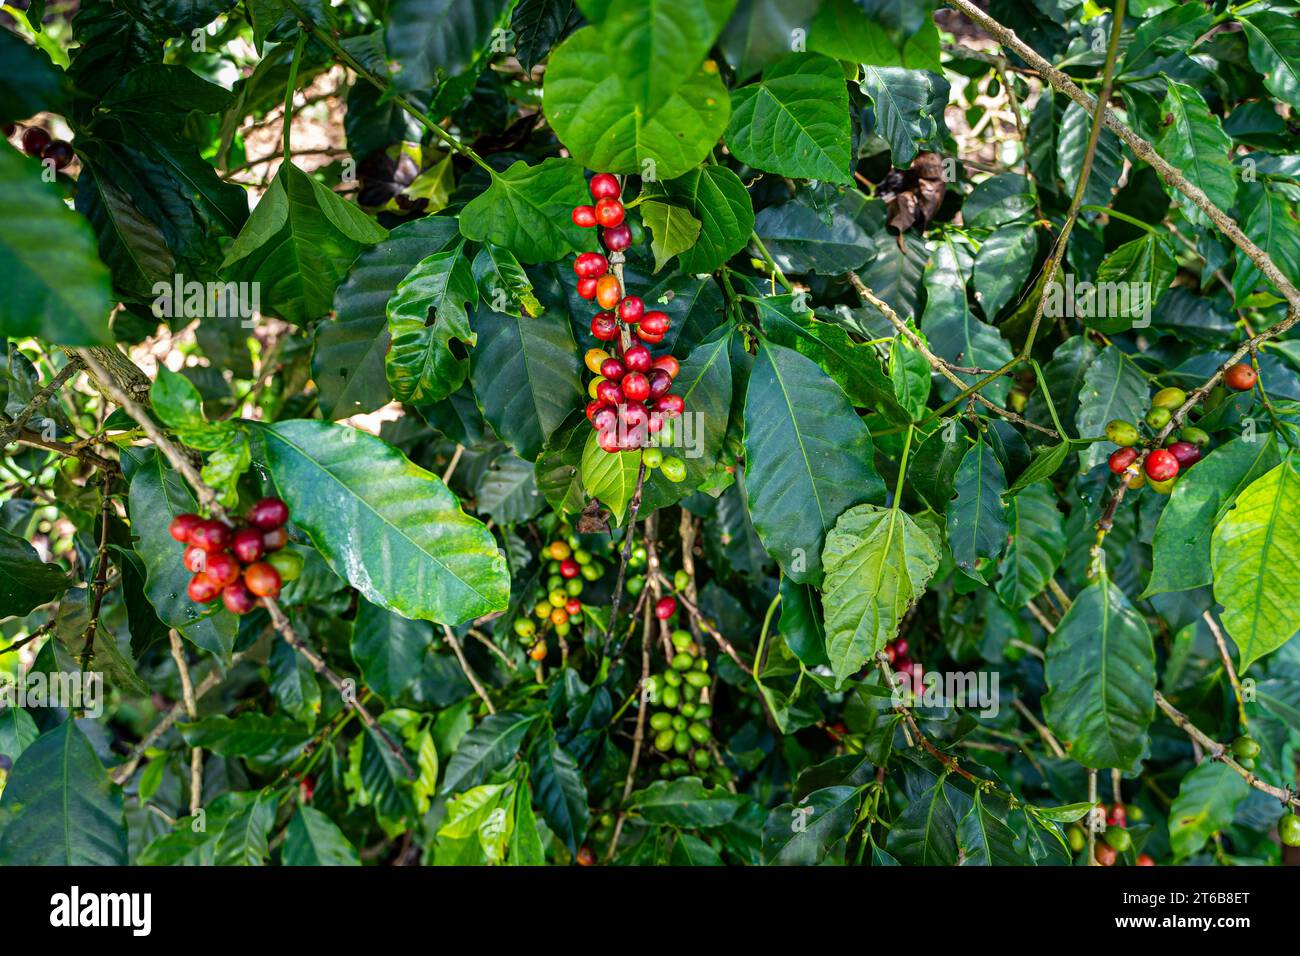 Closeup view of a creen coffee bean plantation in Costa Rica Stock Photo